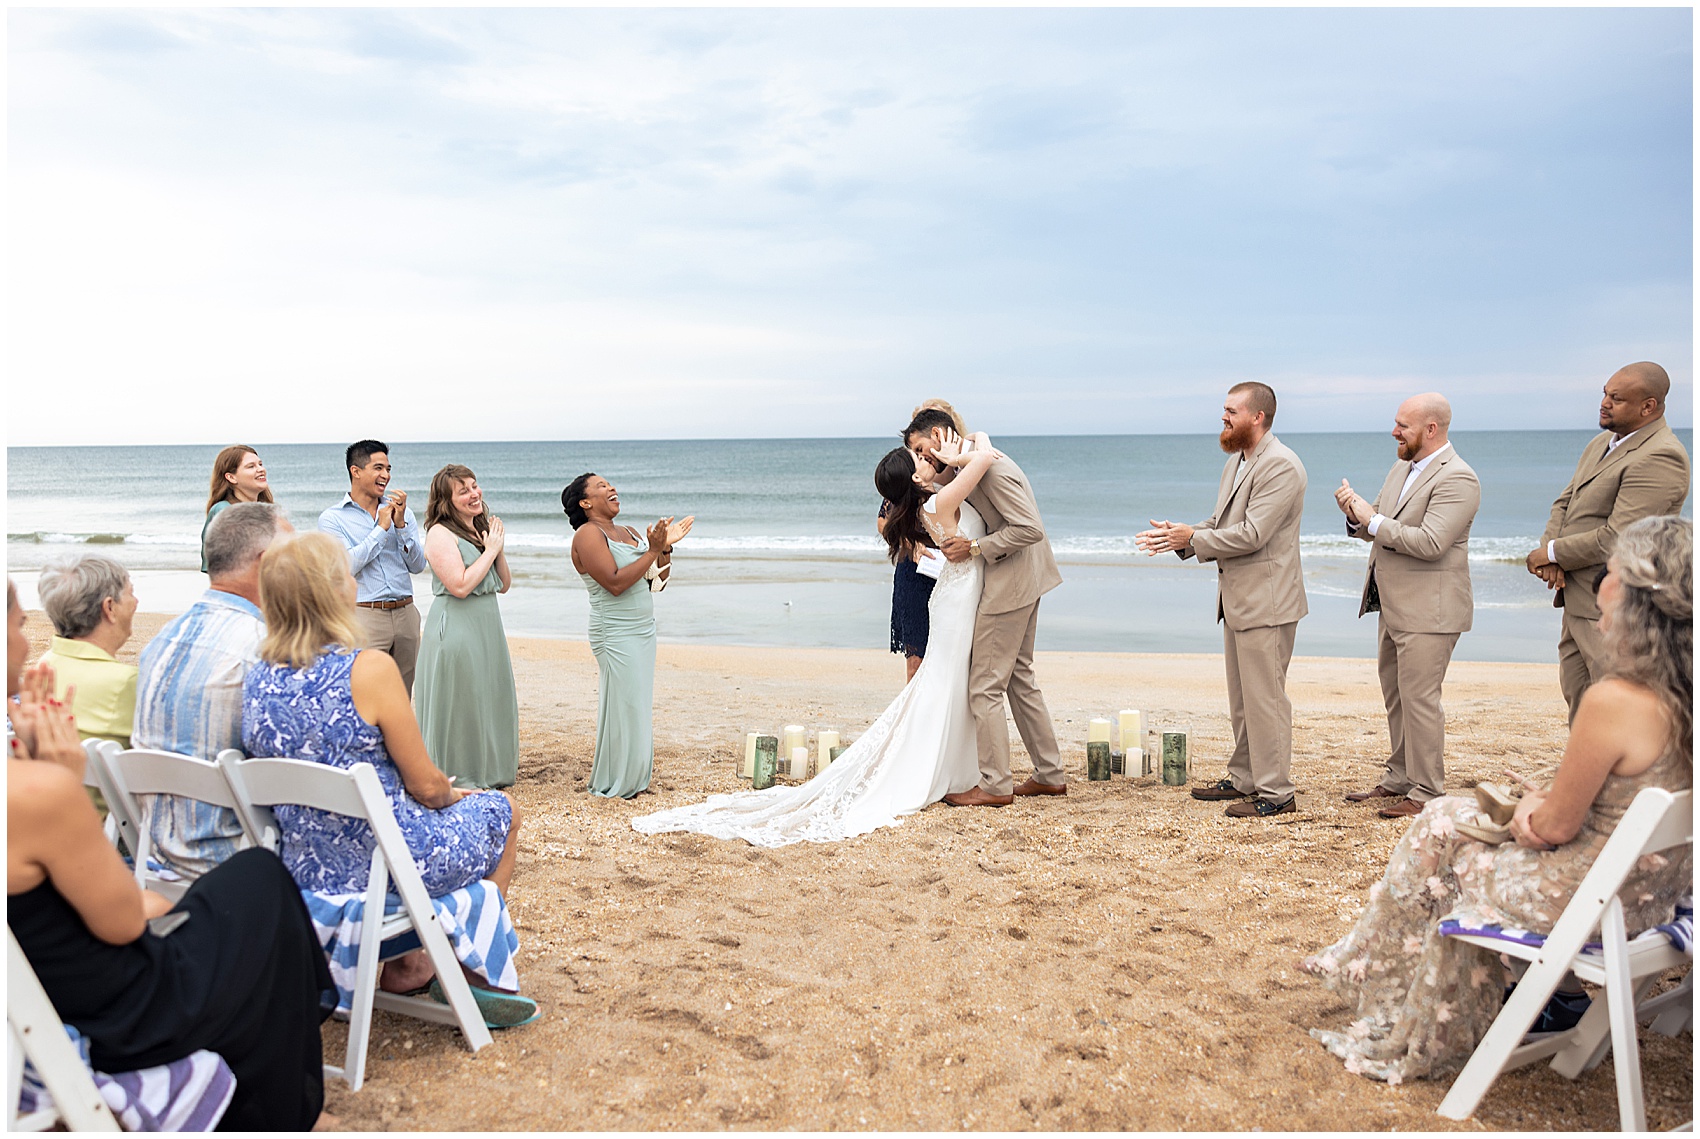 Newlyweds kiss to end their beach wedding ceremony at their serenata beach club wedding